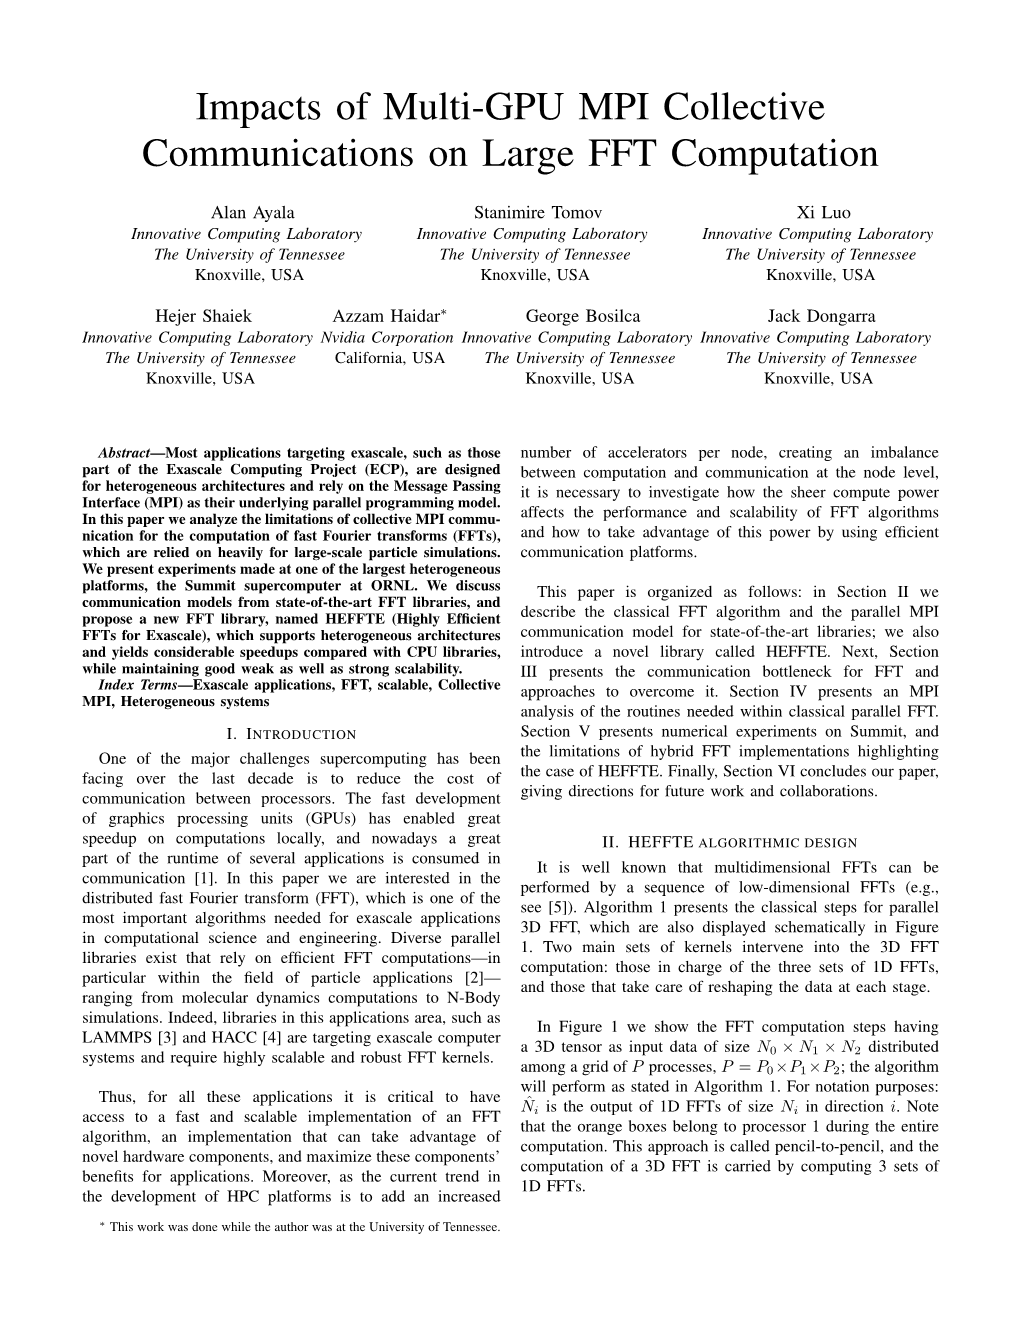 Impacts of Multi-GPU MPI Collective Communications on Large FFT Computation